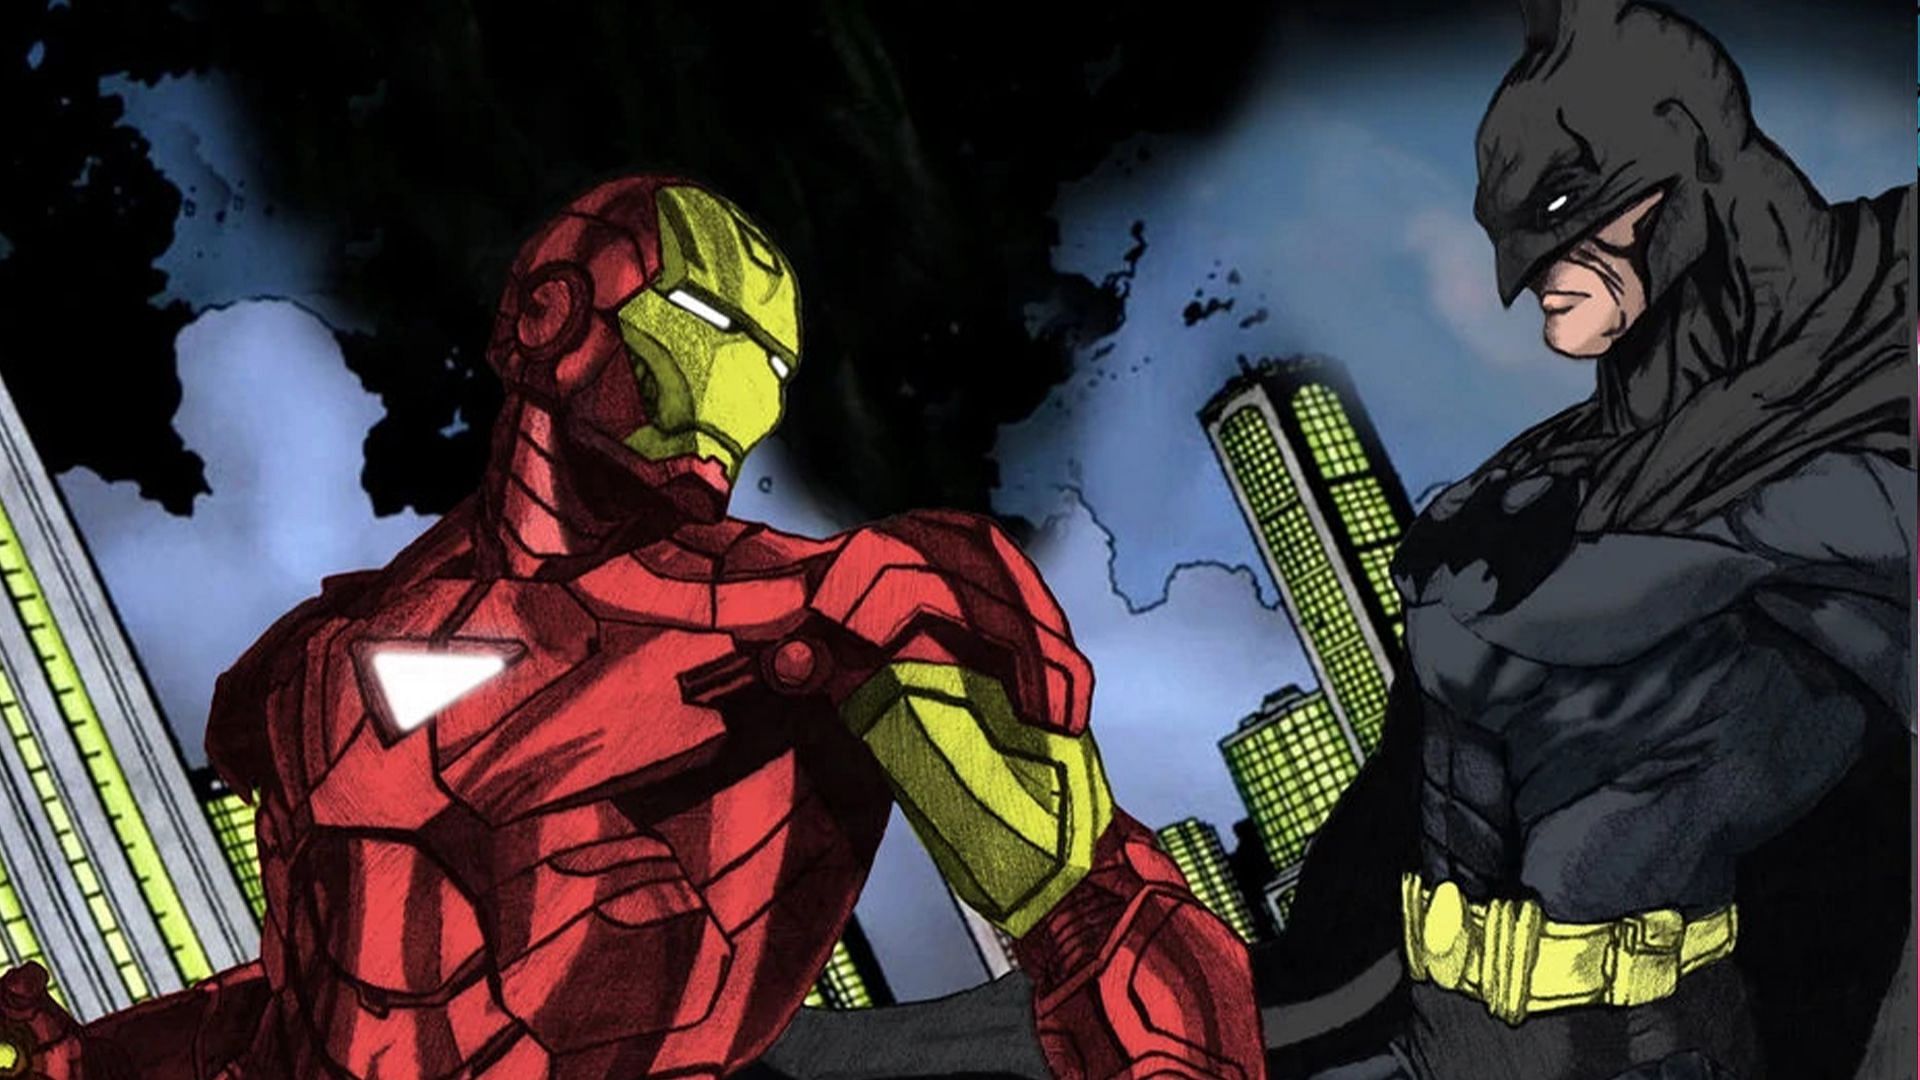 Batman vs. Iron Man: Who is a richer superhero?